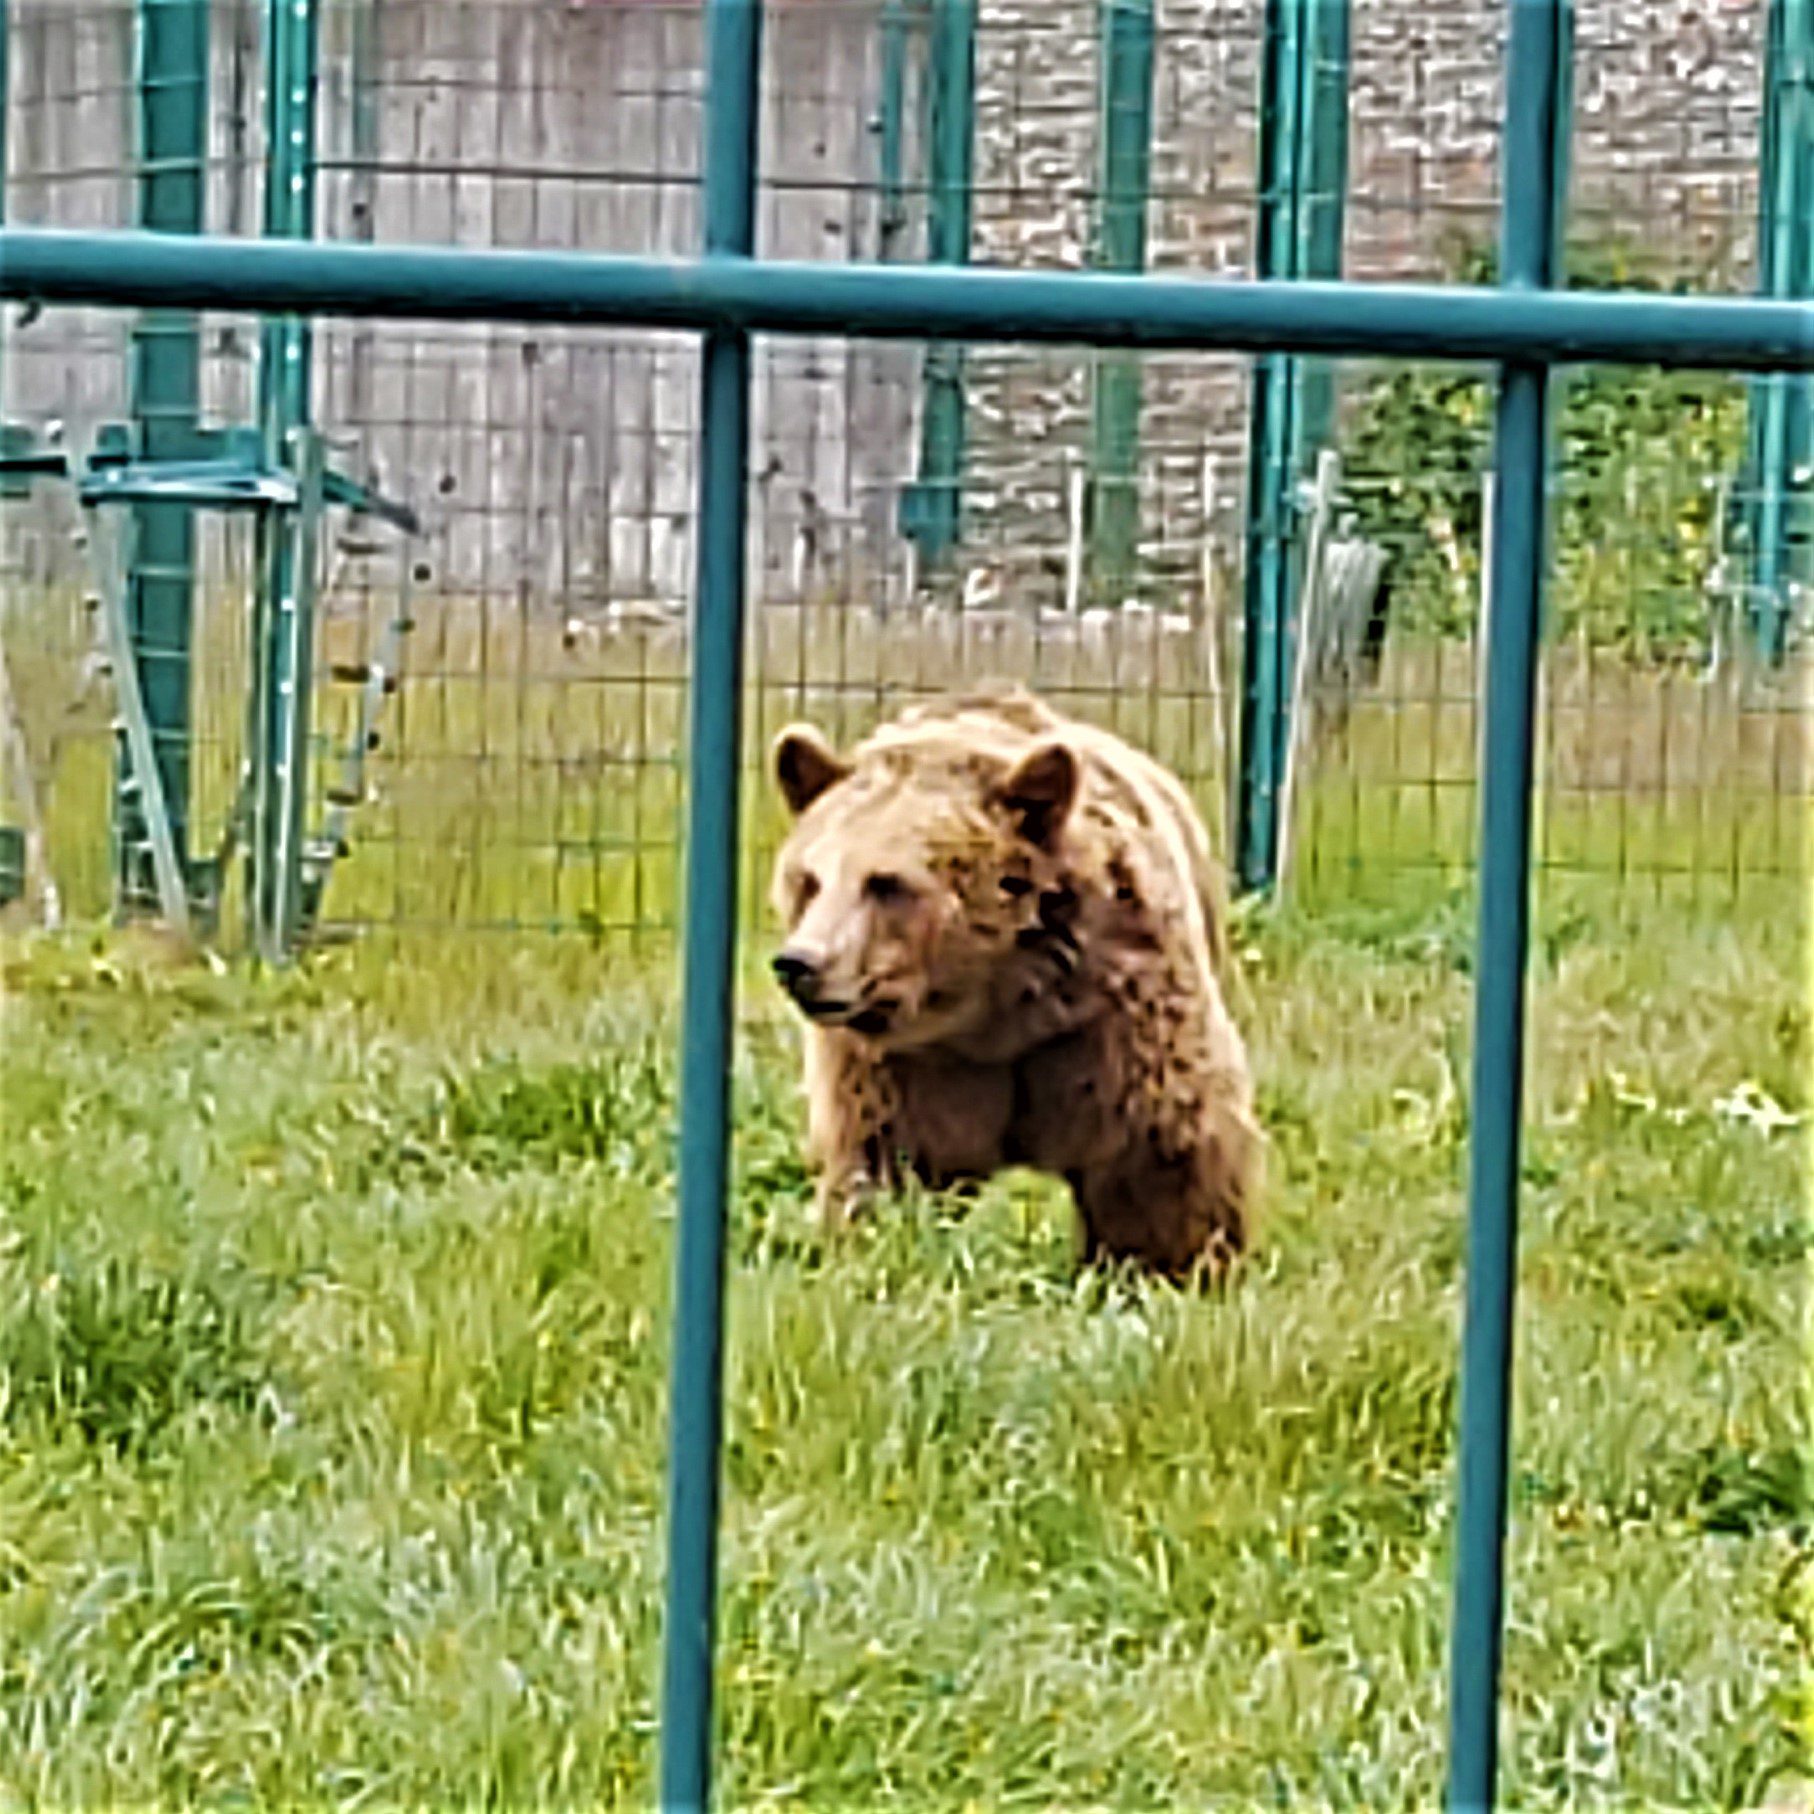 bear in a zoo enclosure